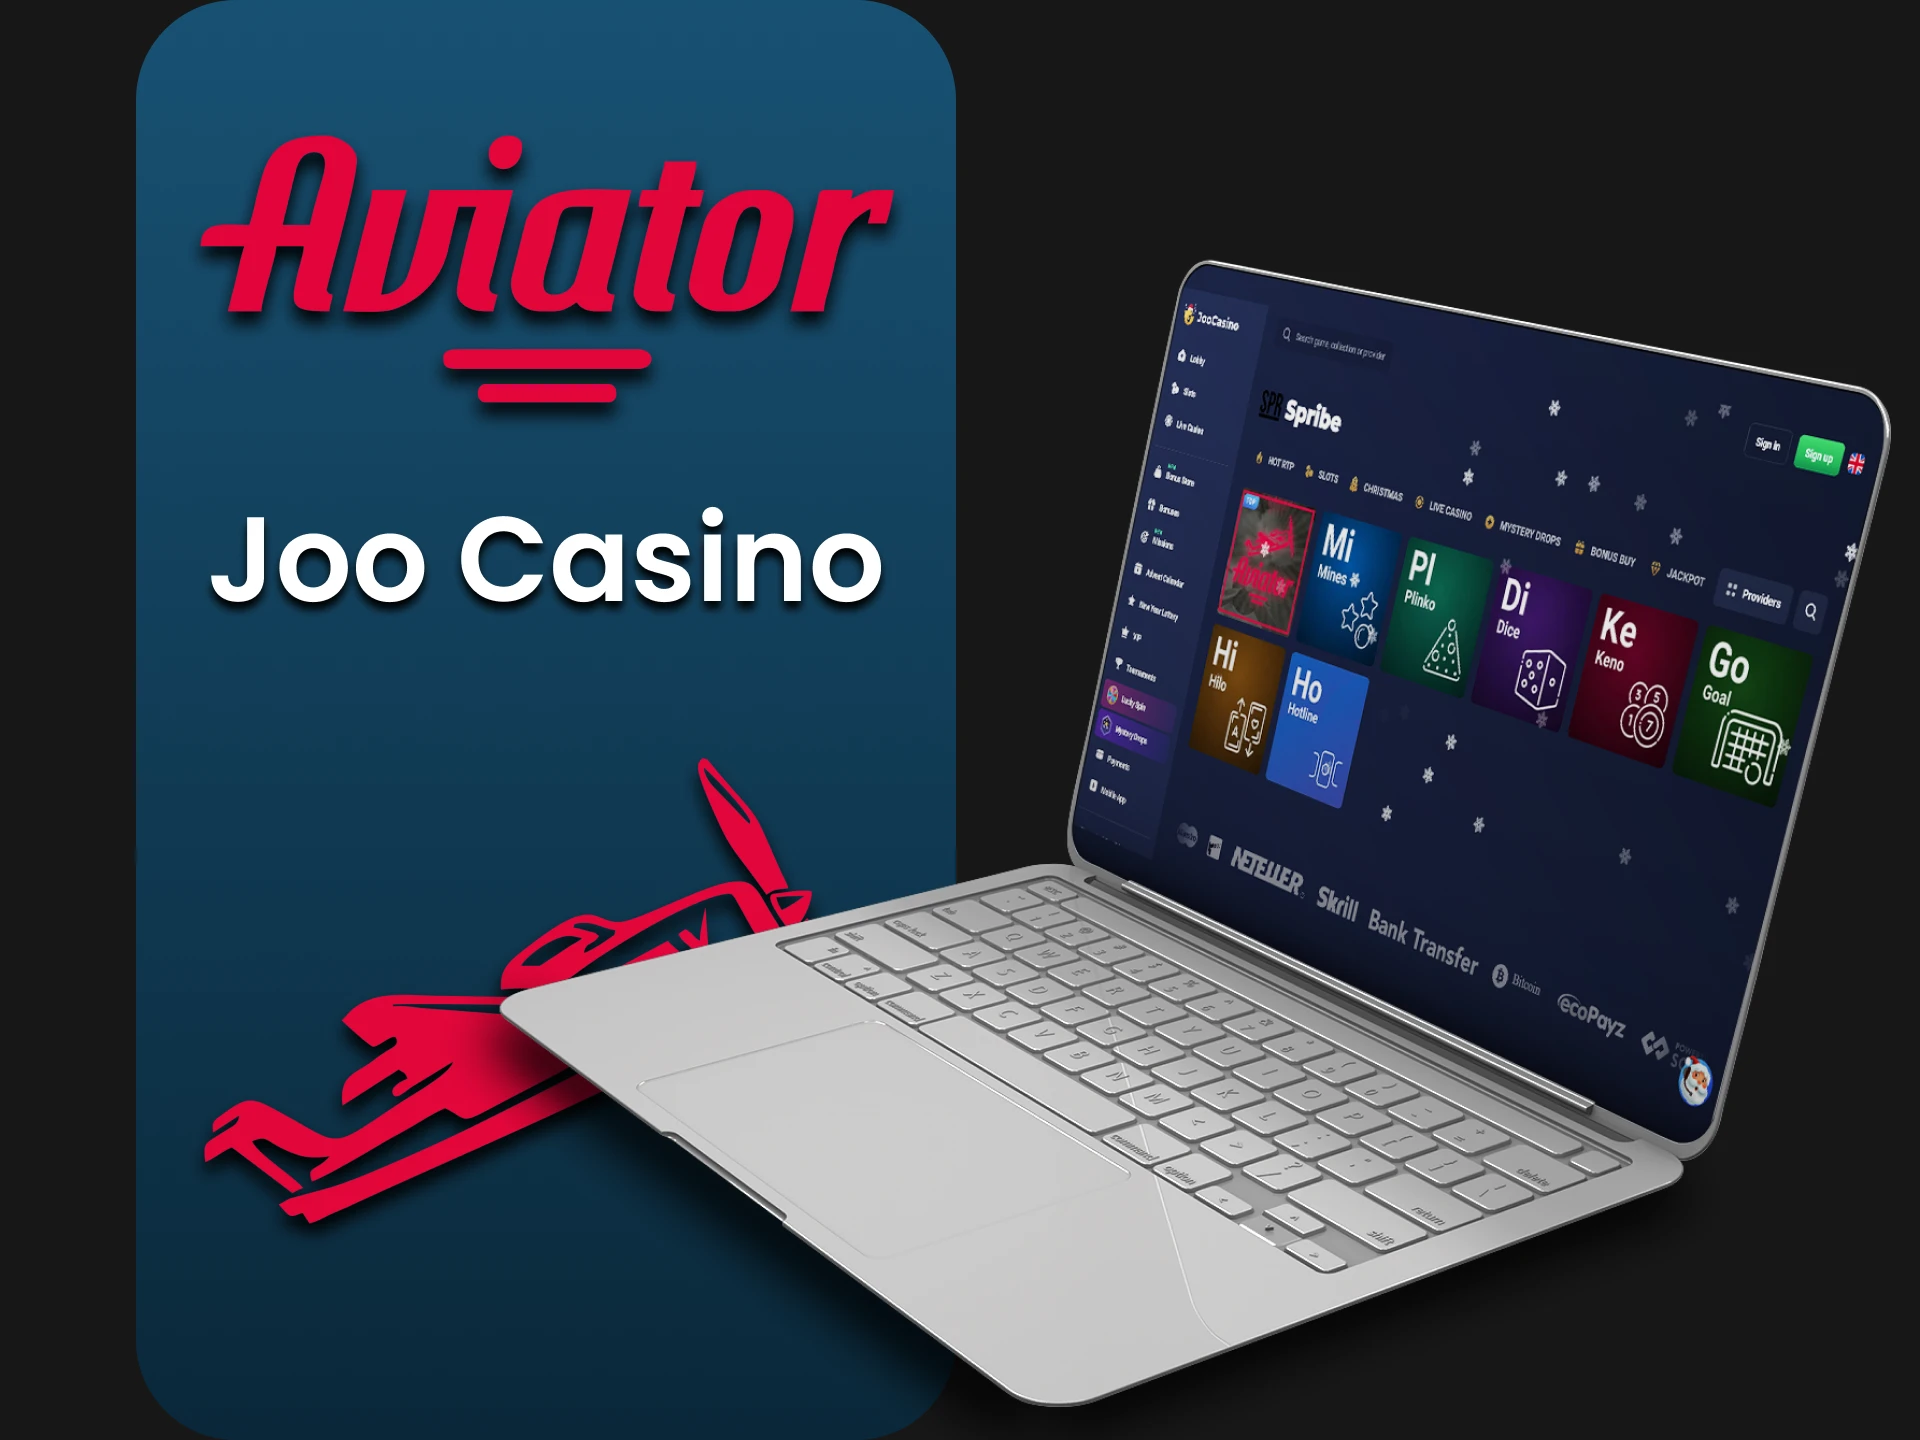 To play Aviator, choose the Joo service.